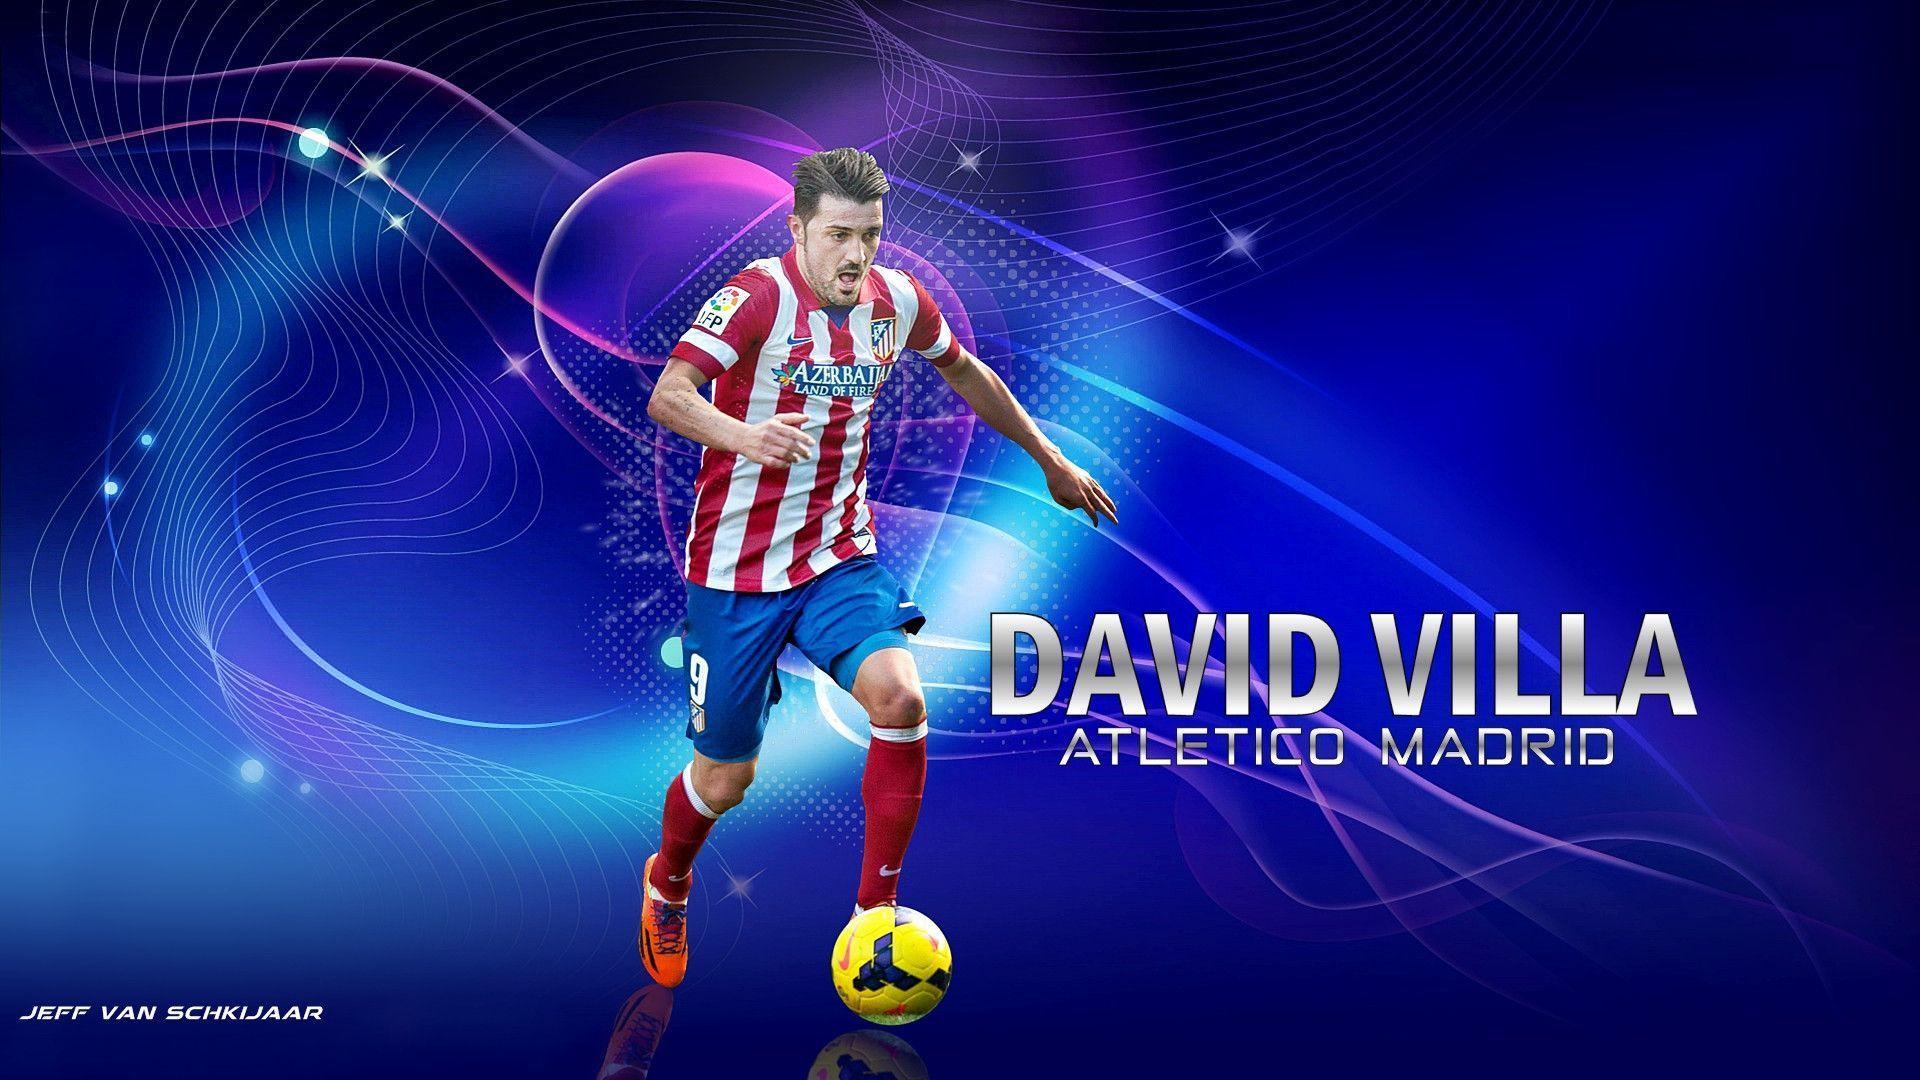 David Villa Atletico Madrid Wallpapers by jeffery10